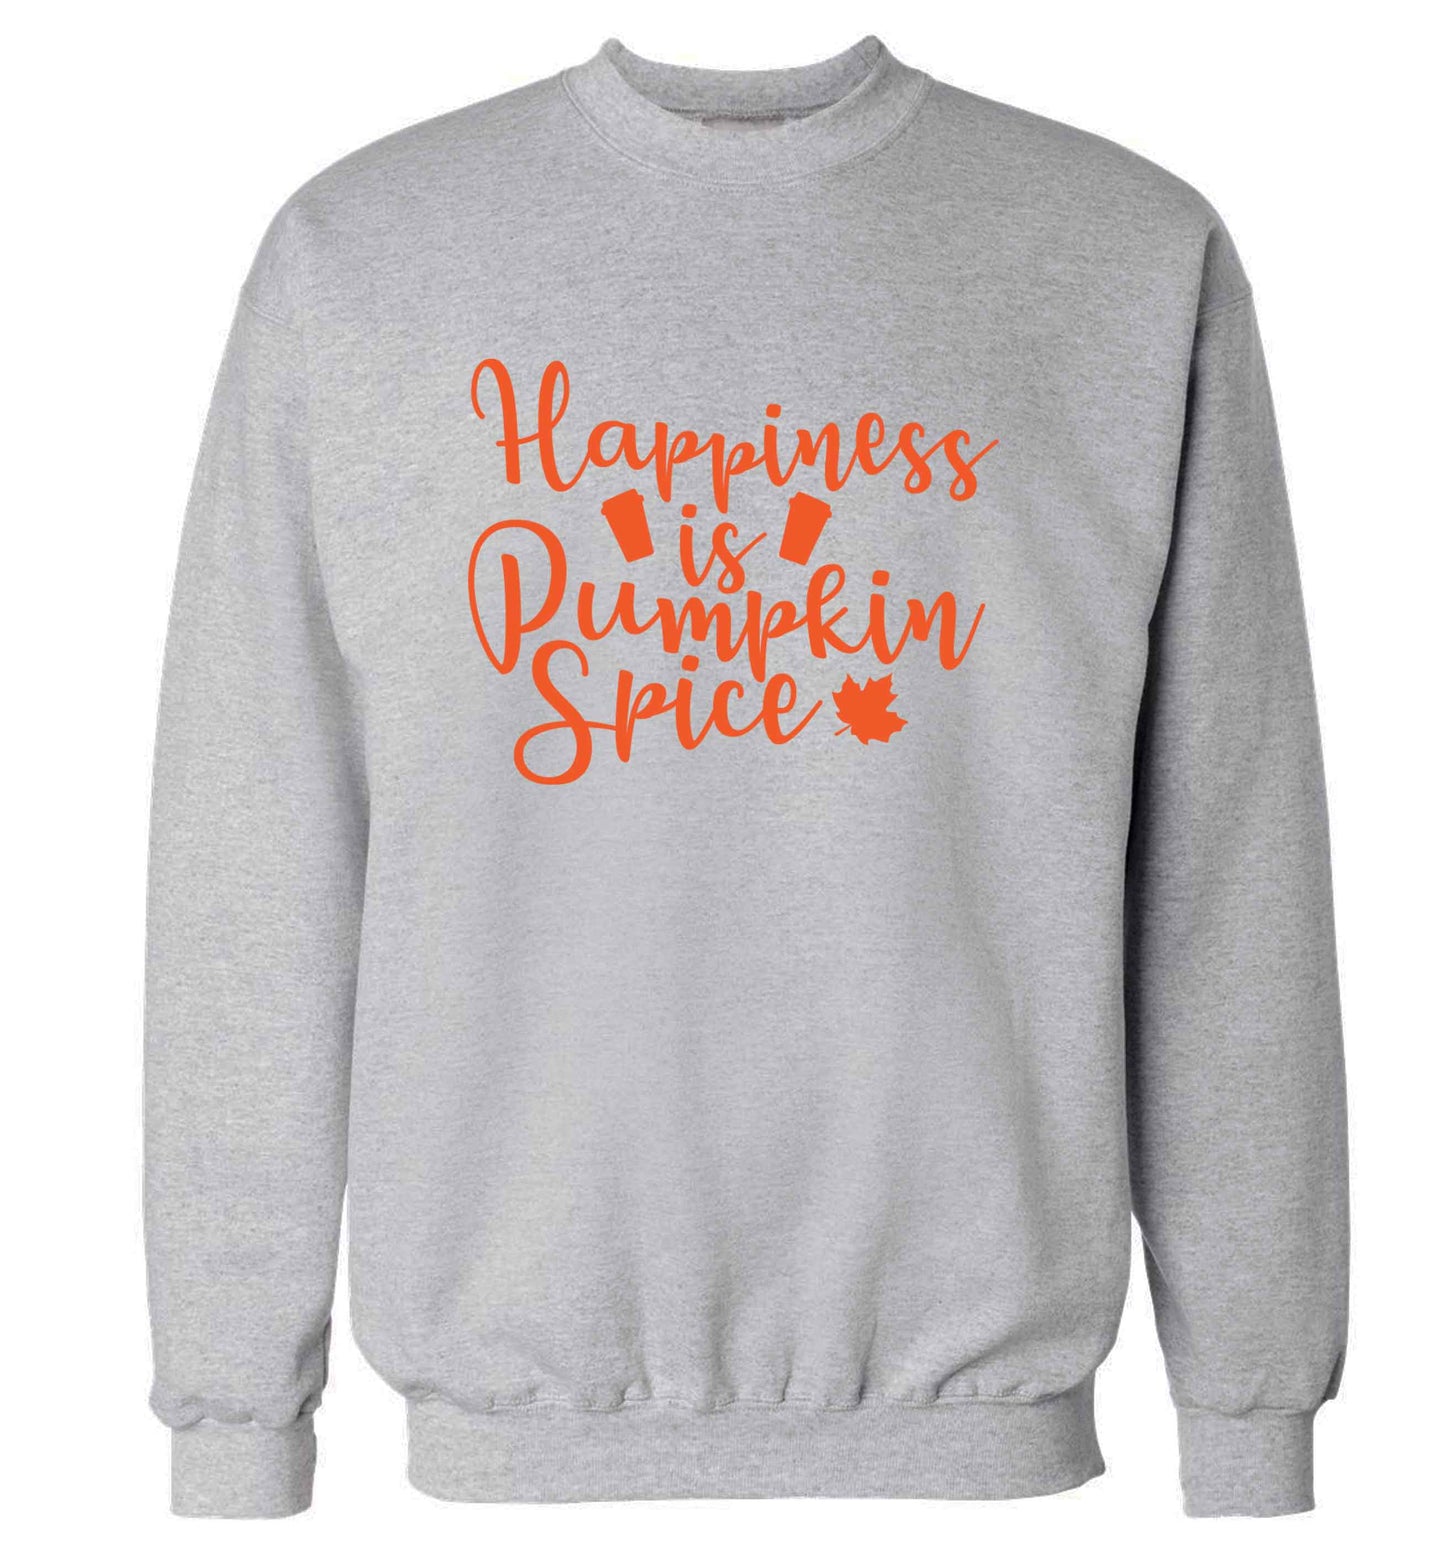 Happiness Pumpkin Spice adult's unisex grey sweater 2XL